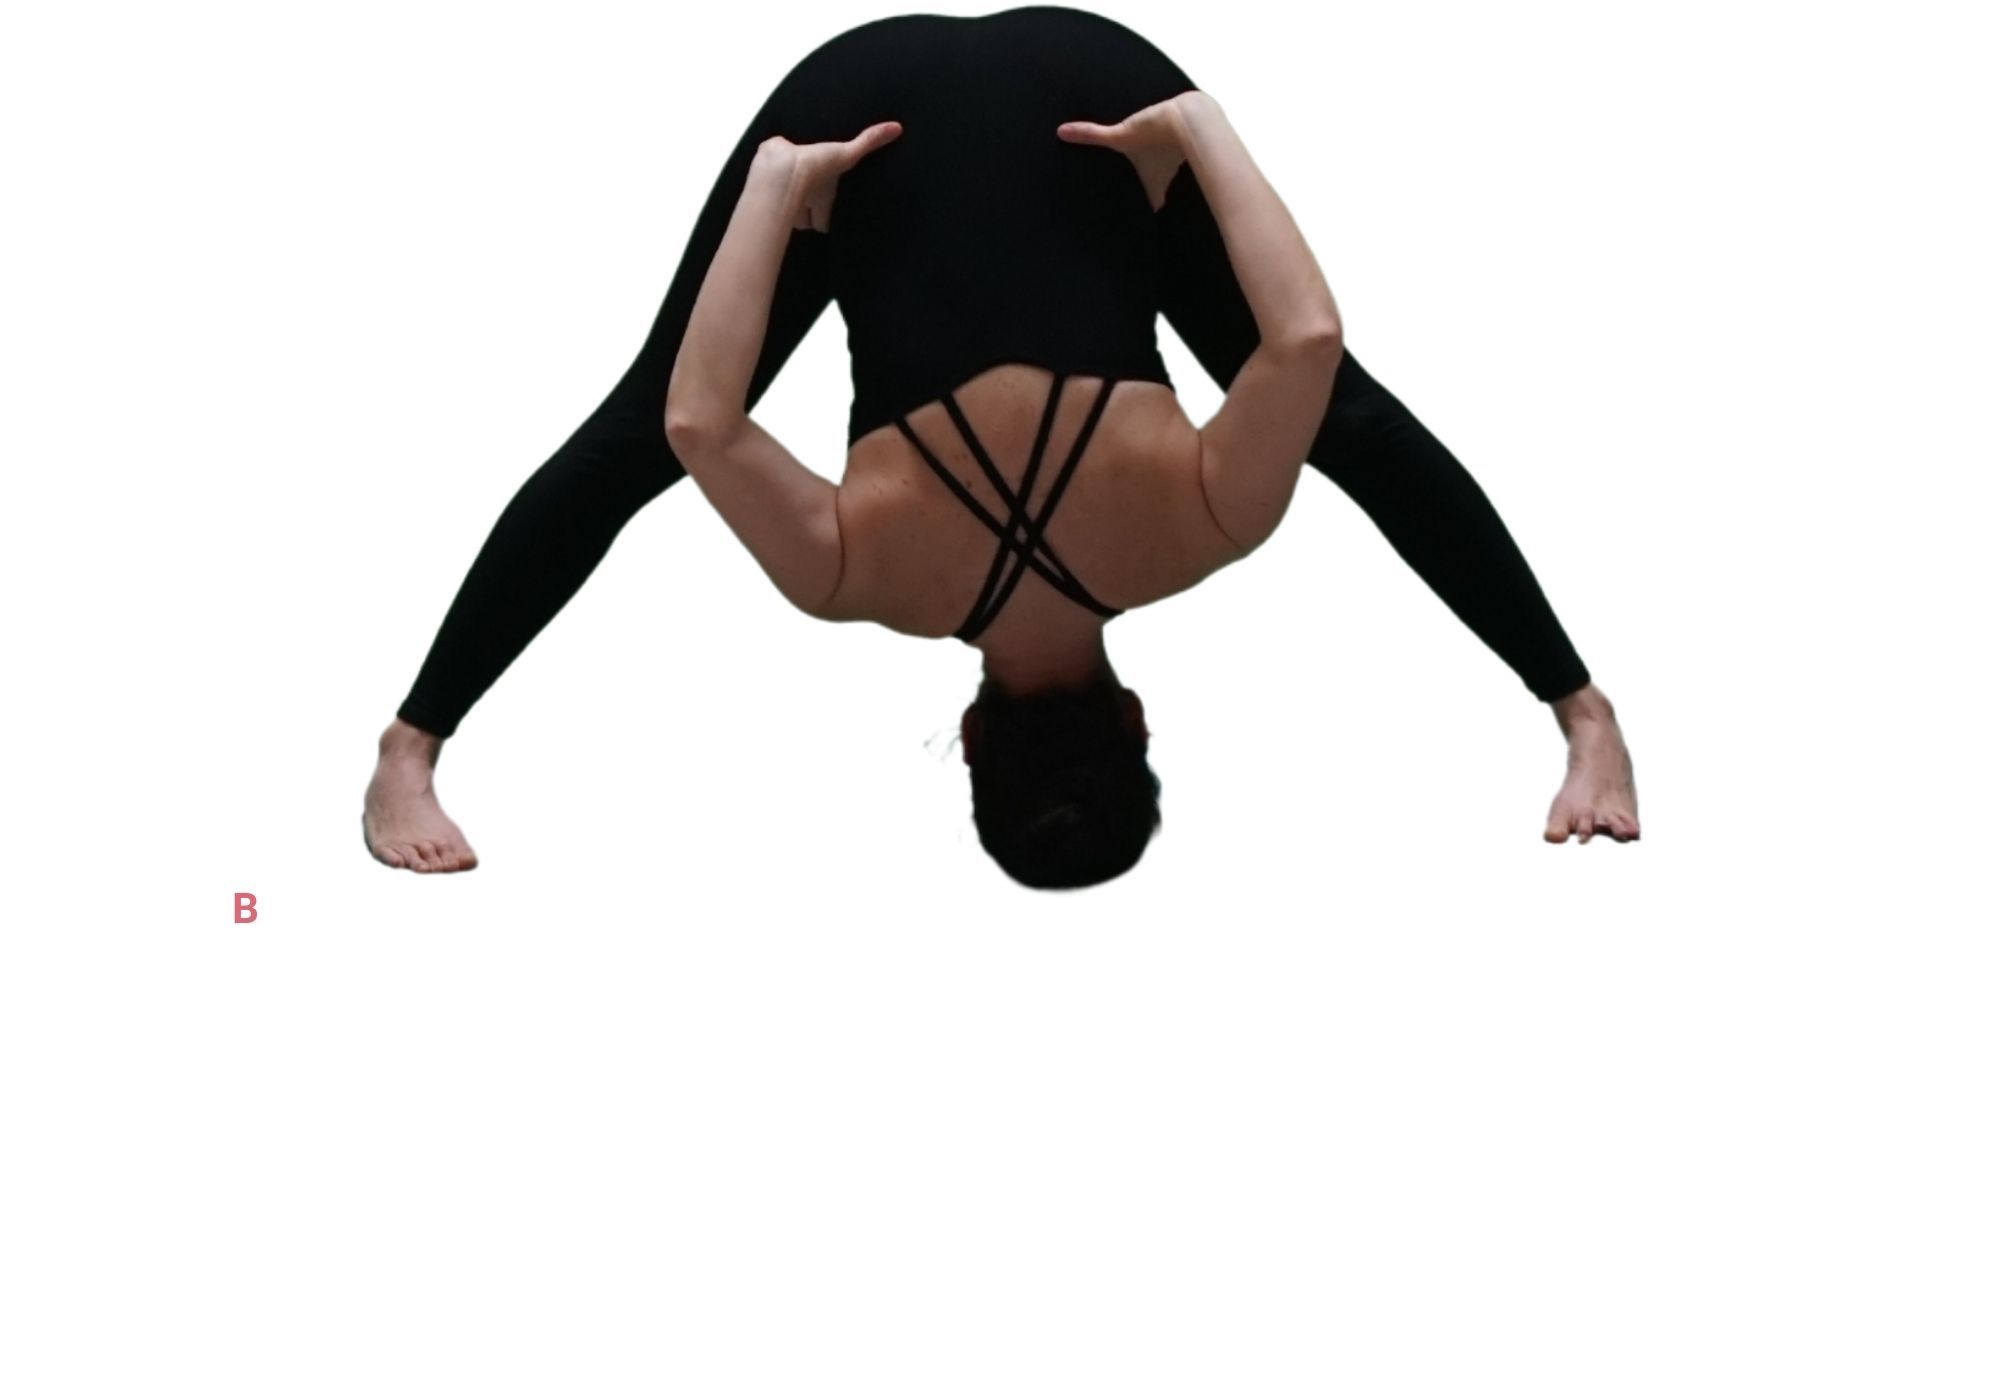 Posture de yoga : prasarita padottanasana - flexion avant debout pieds écartés B